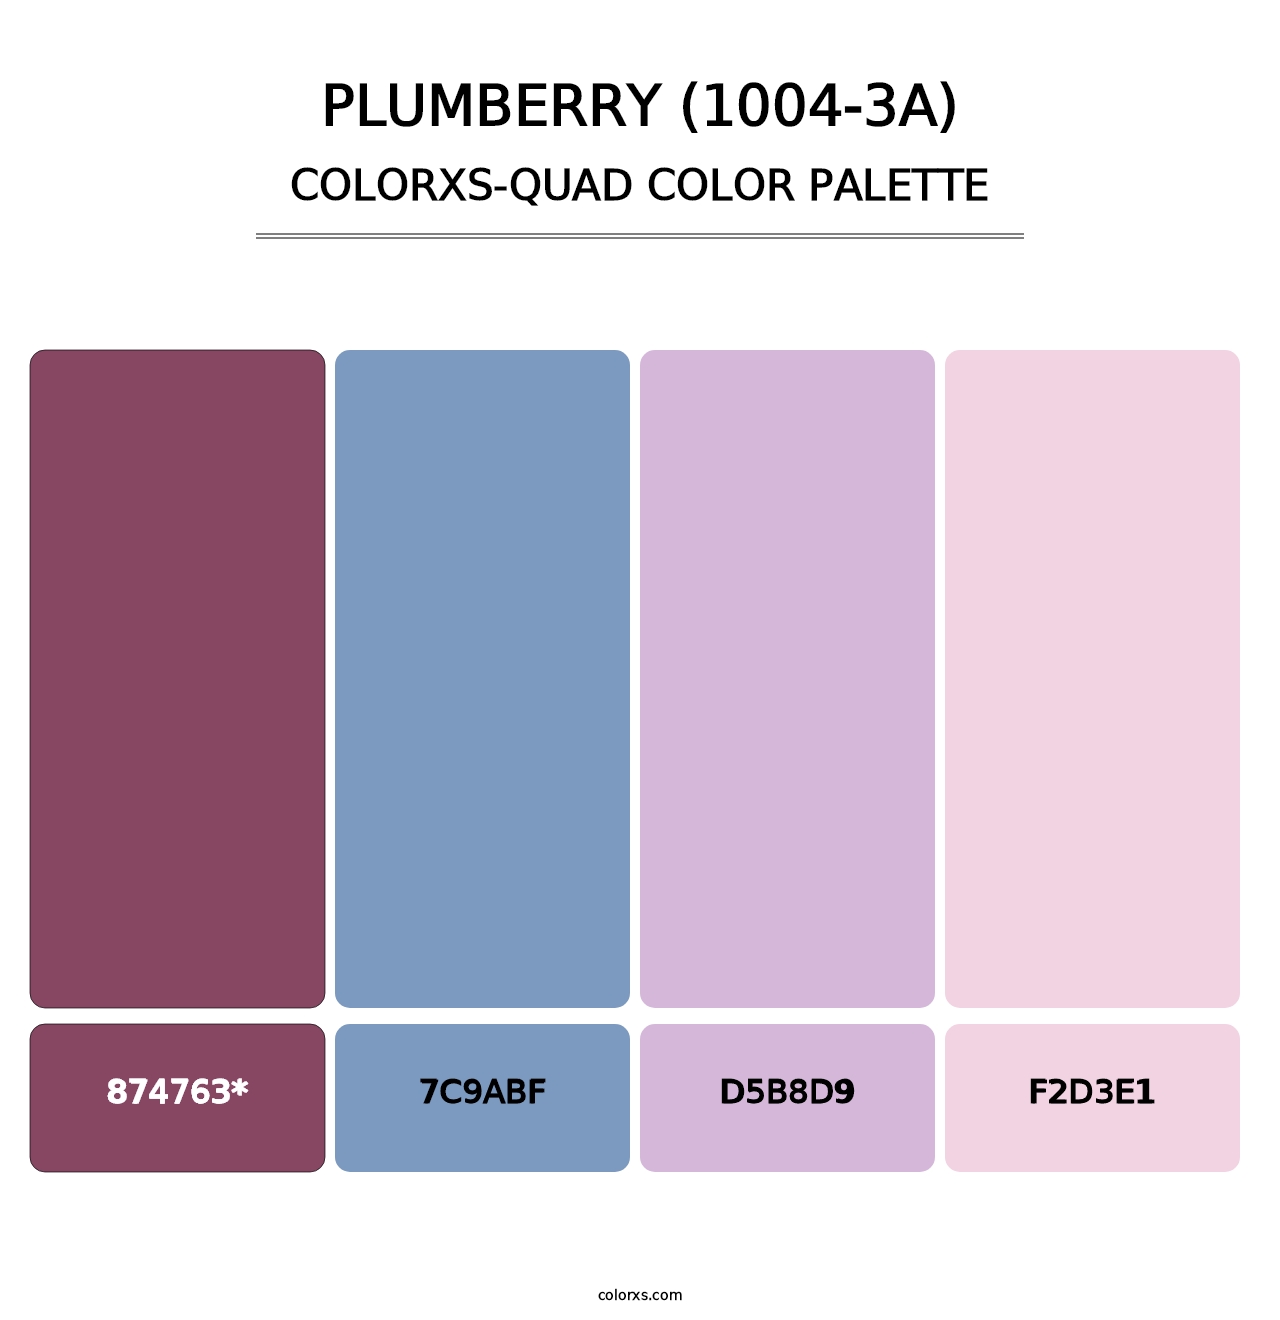 Plumberry (1004-3A) - Colorxs Quad Palette